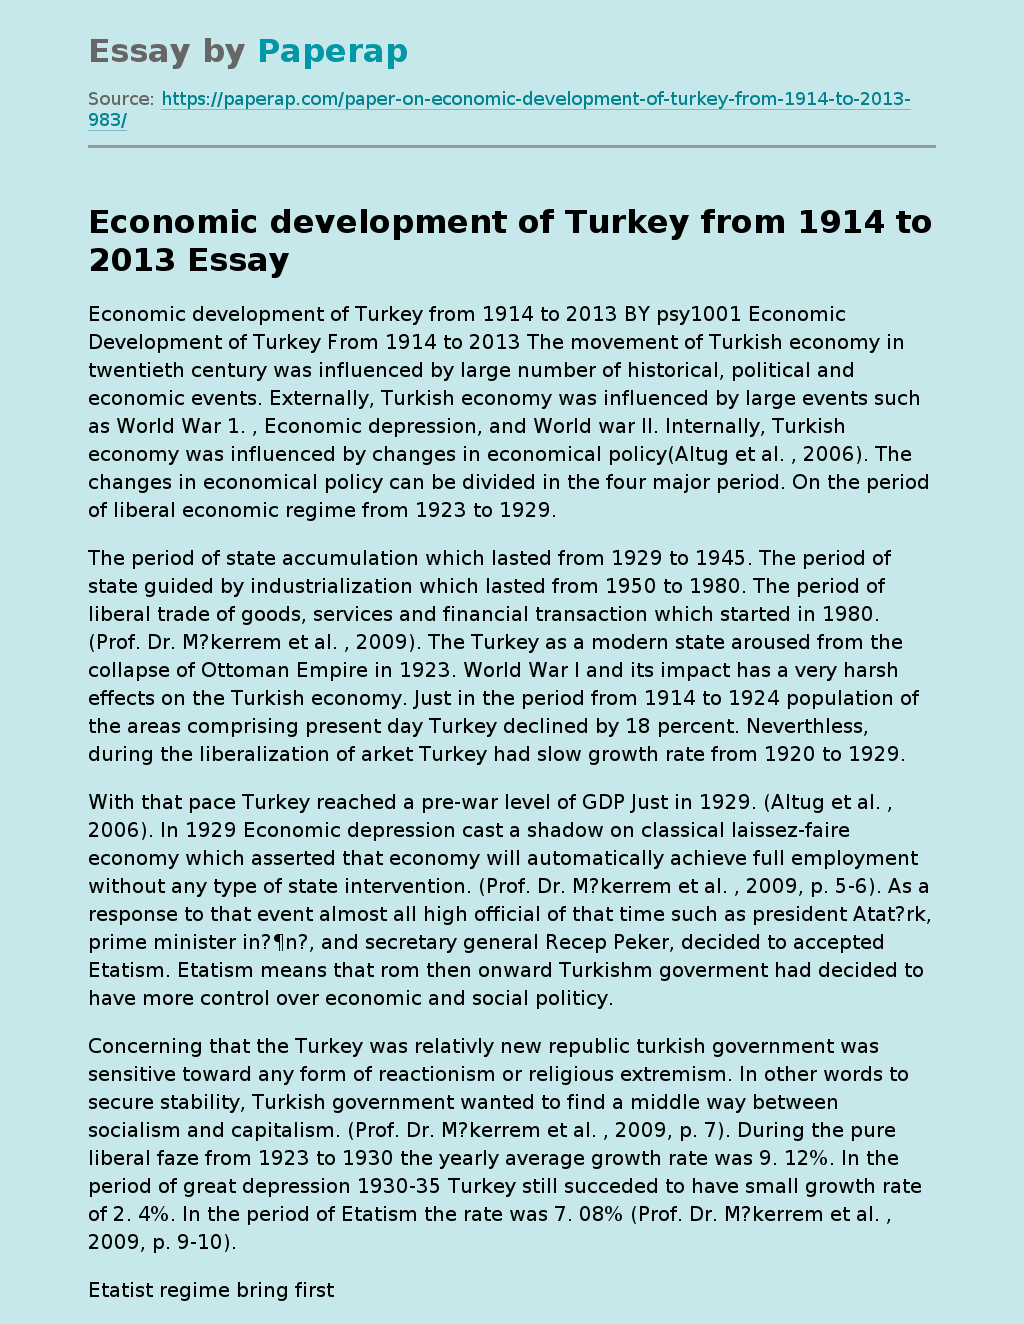 Economic development of Turkey from 1914 to 2013